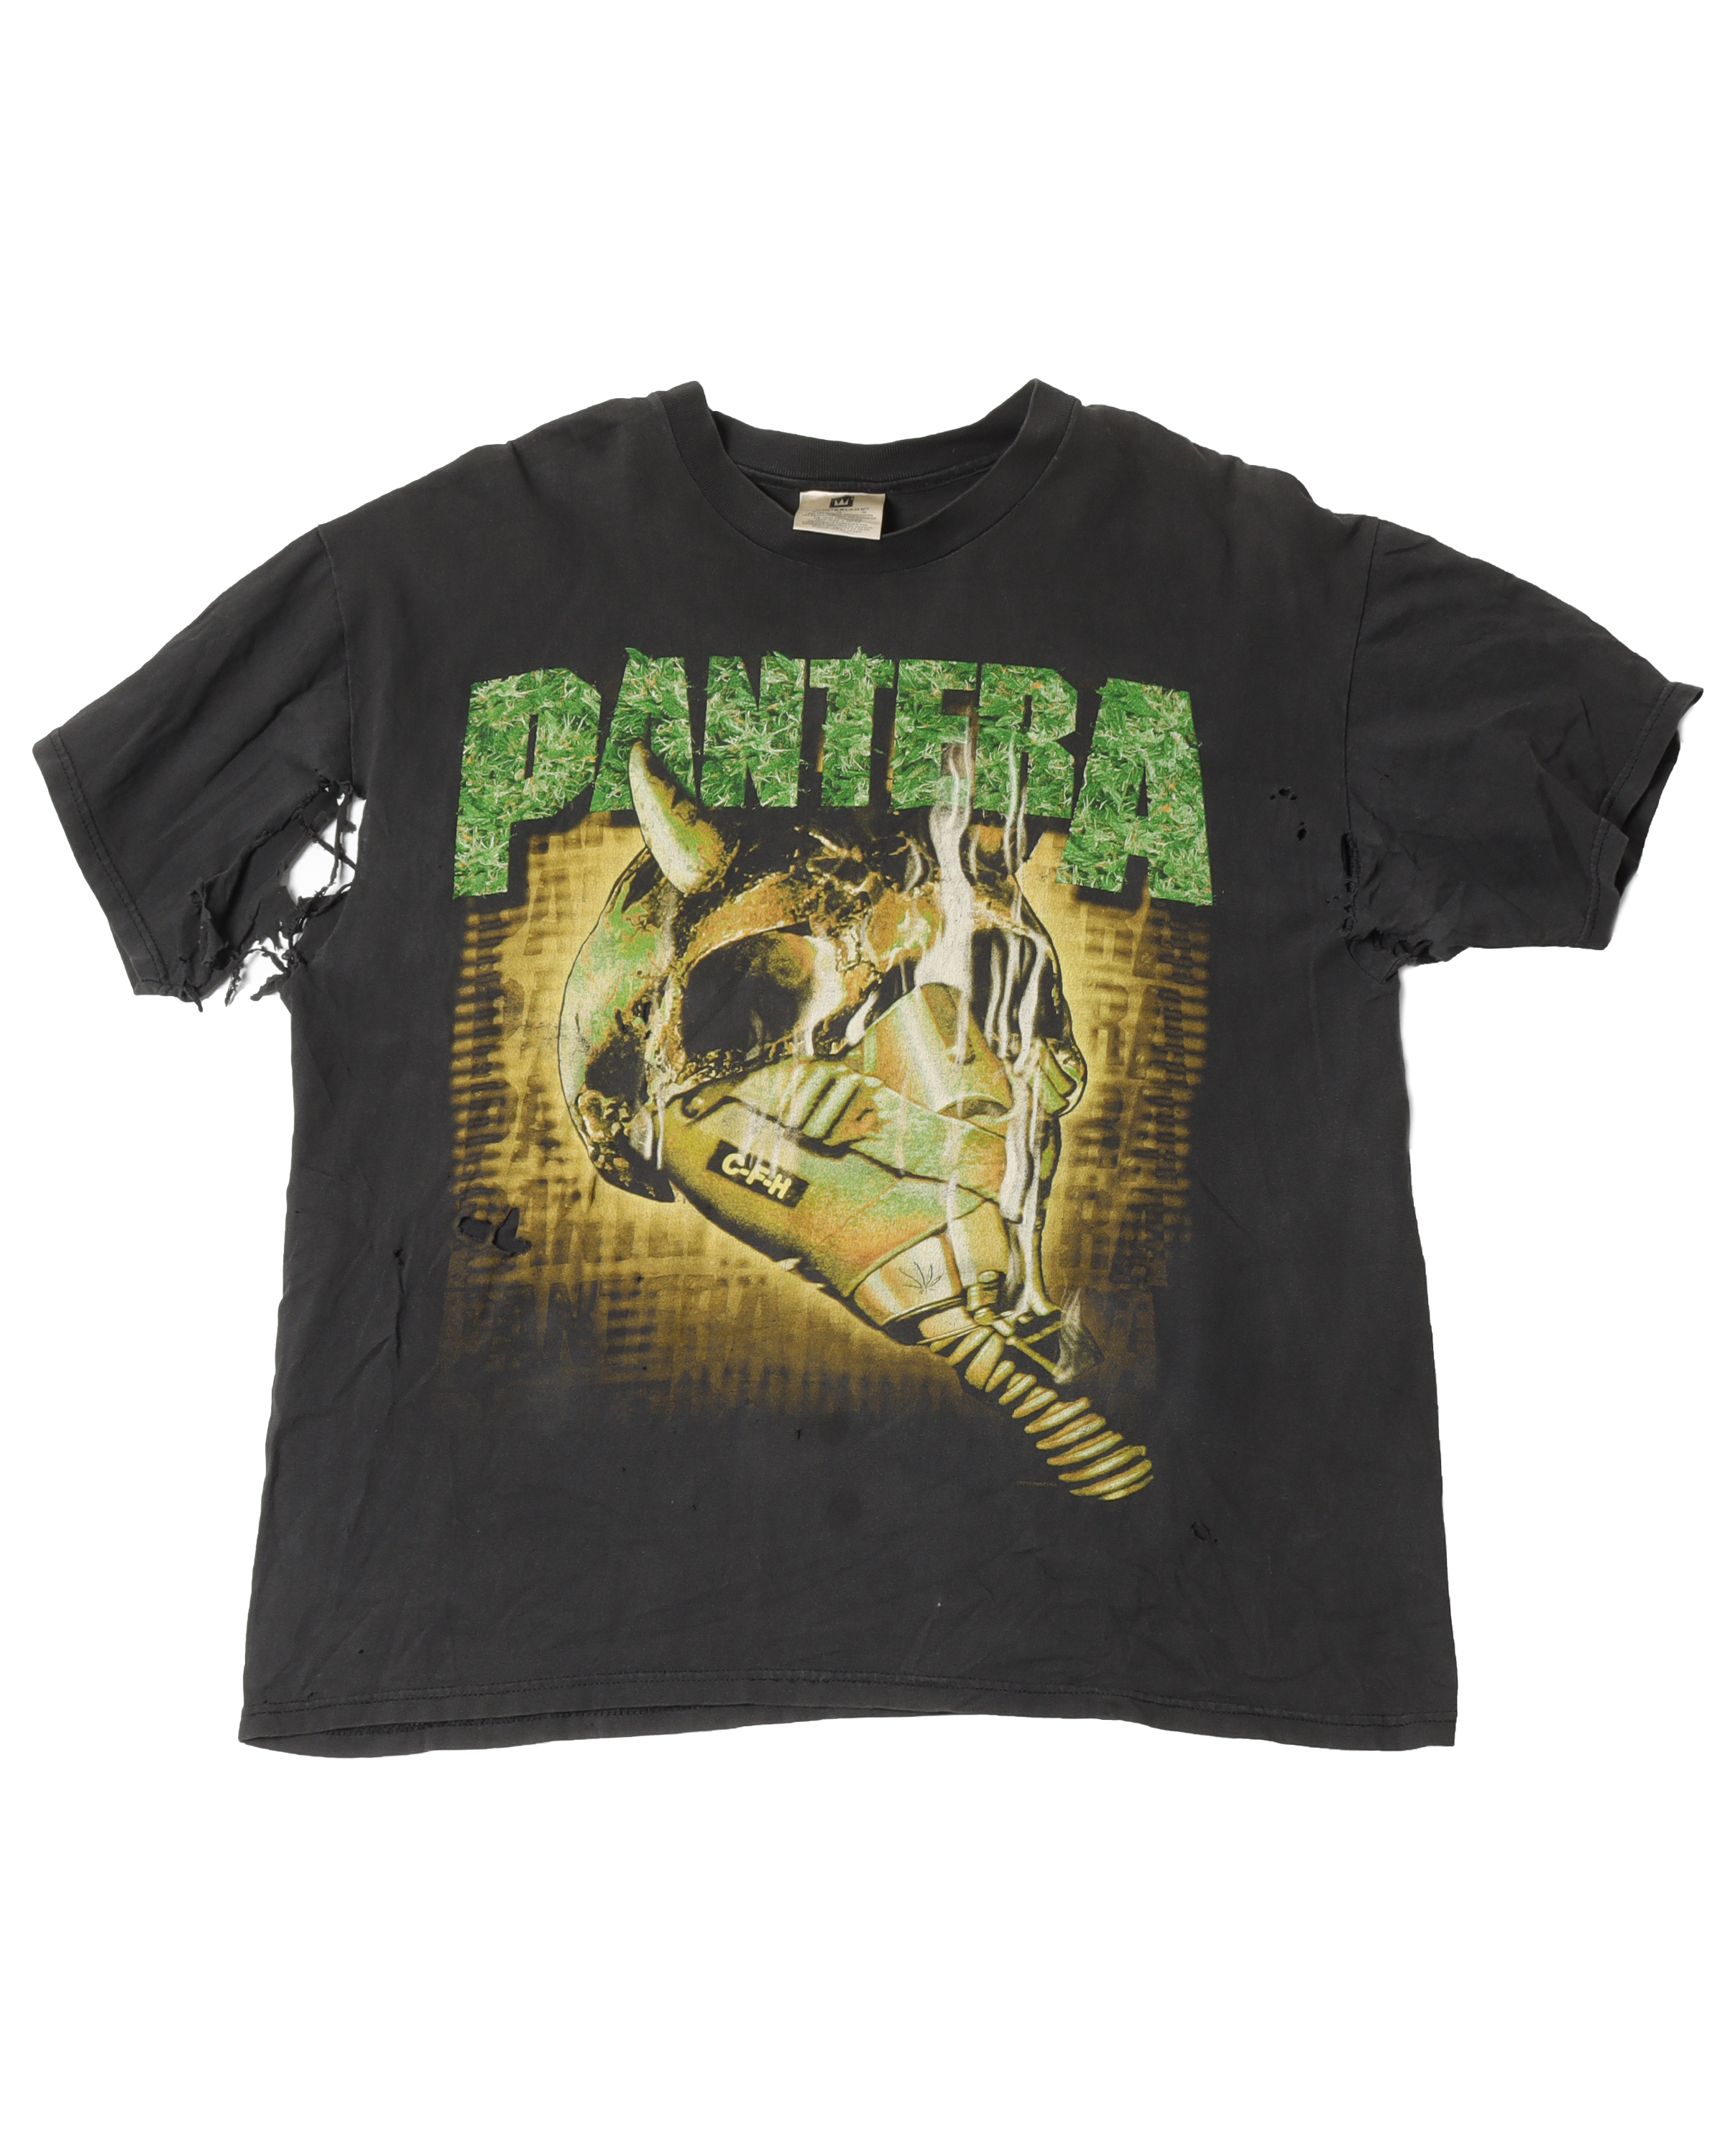 Thrashed Pantera T-Shirt